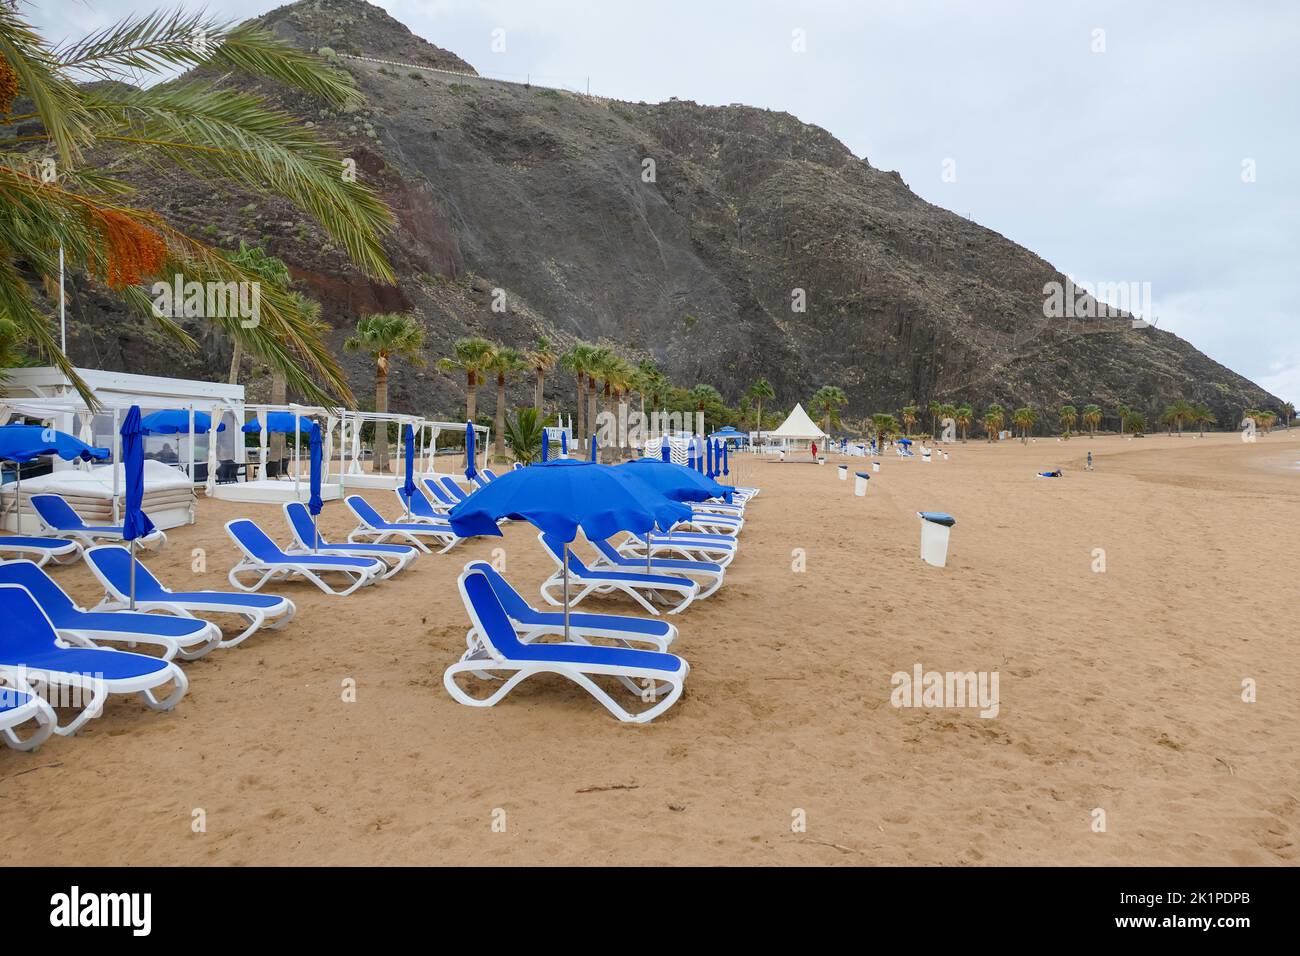 Beach scenery at Playa de las Teresitas at Tenerife, Canary Islands, Spain Stock Photo